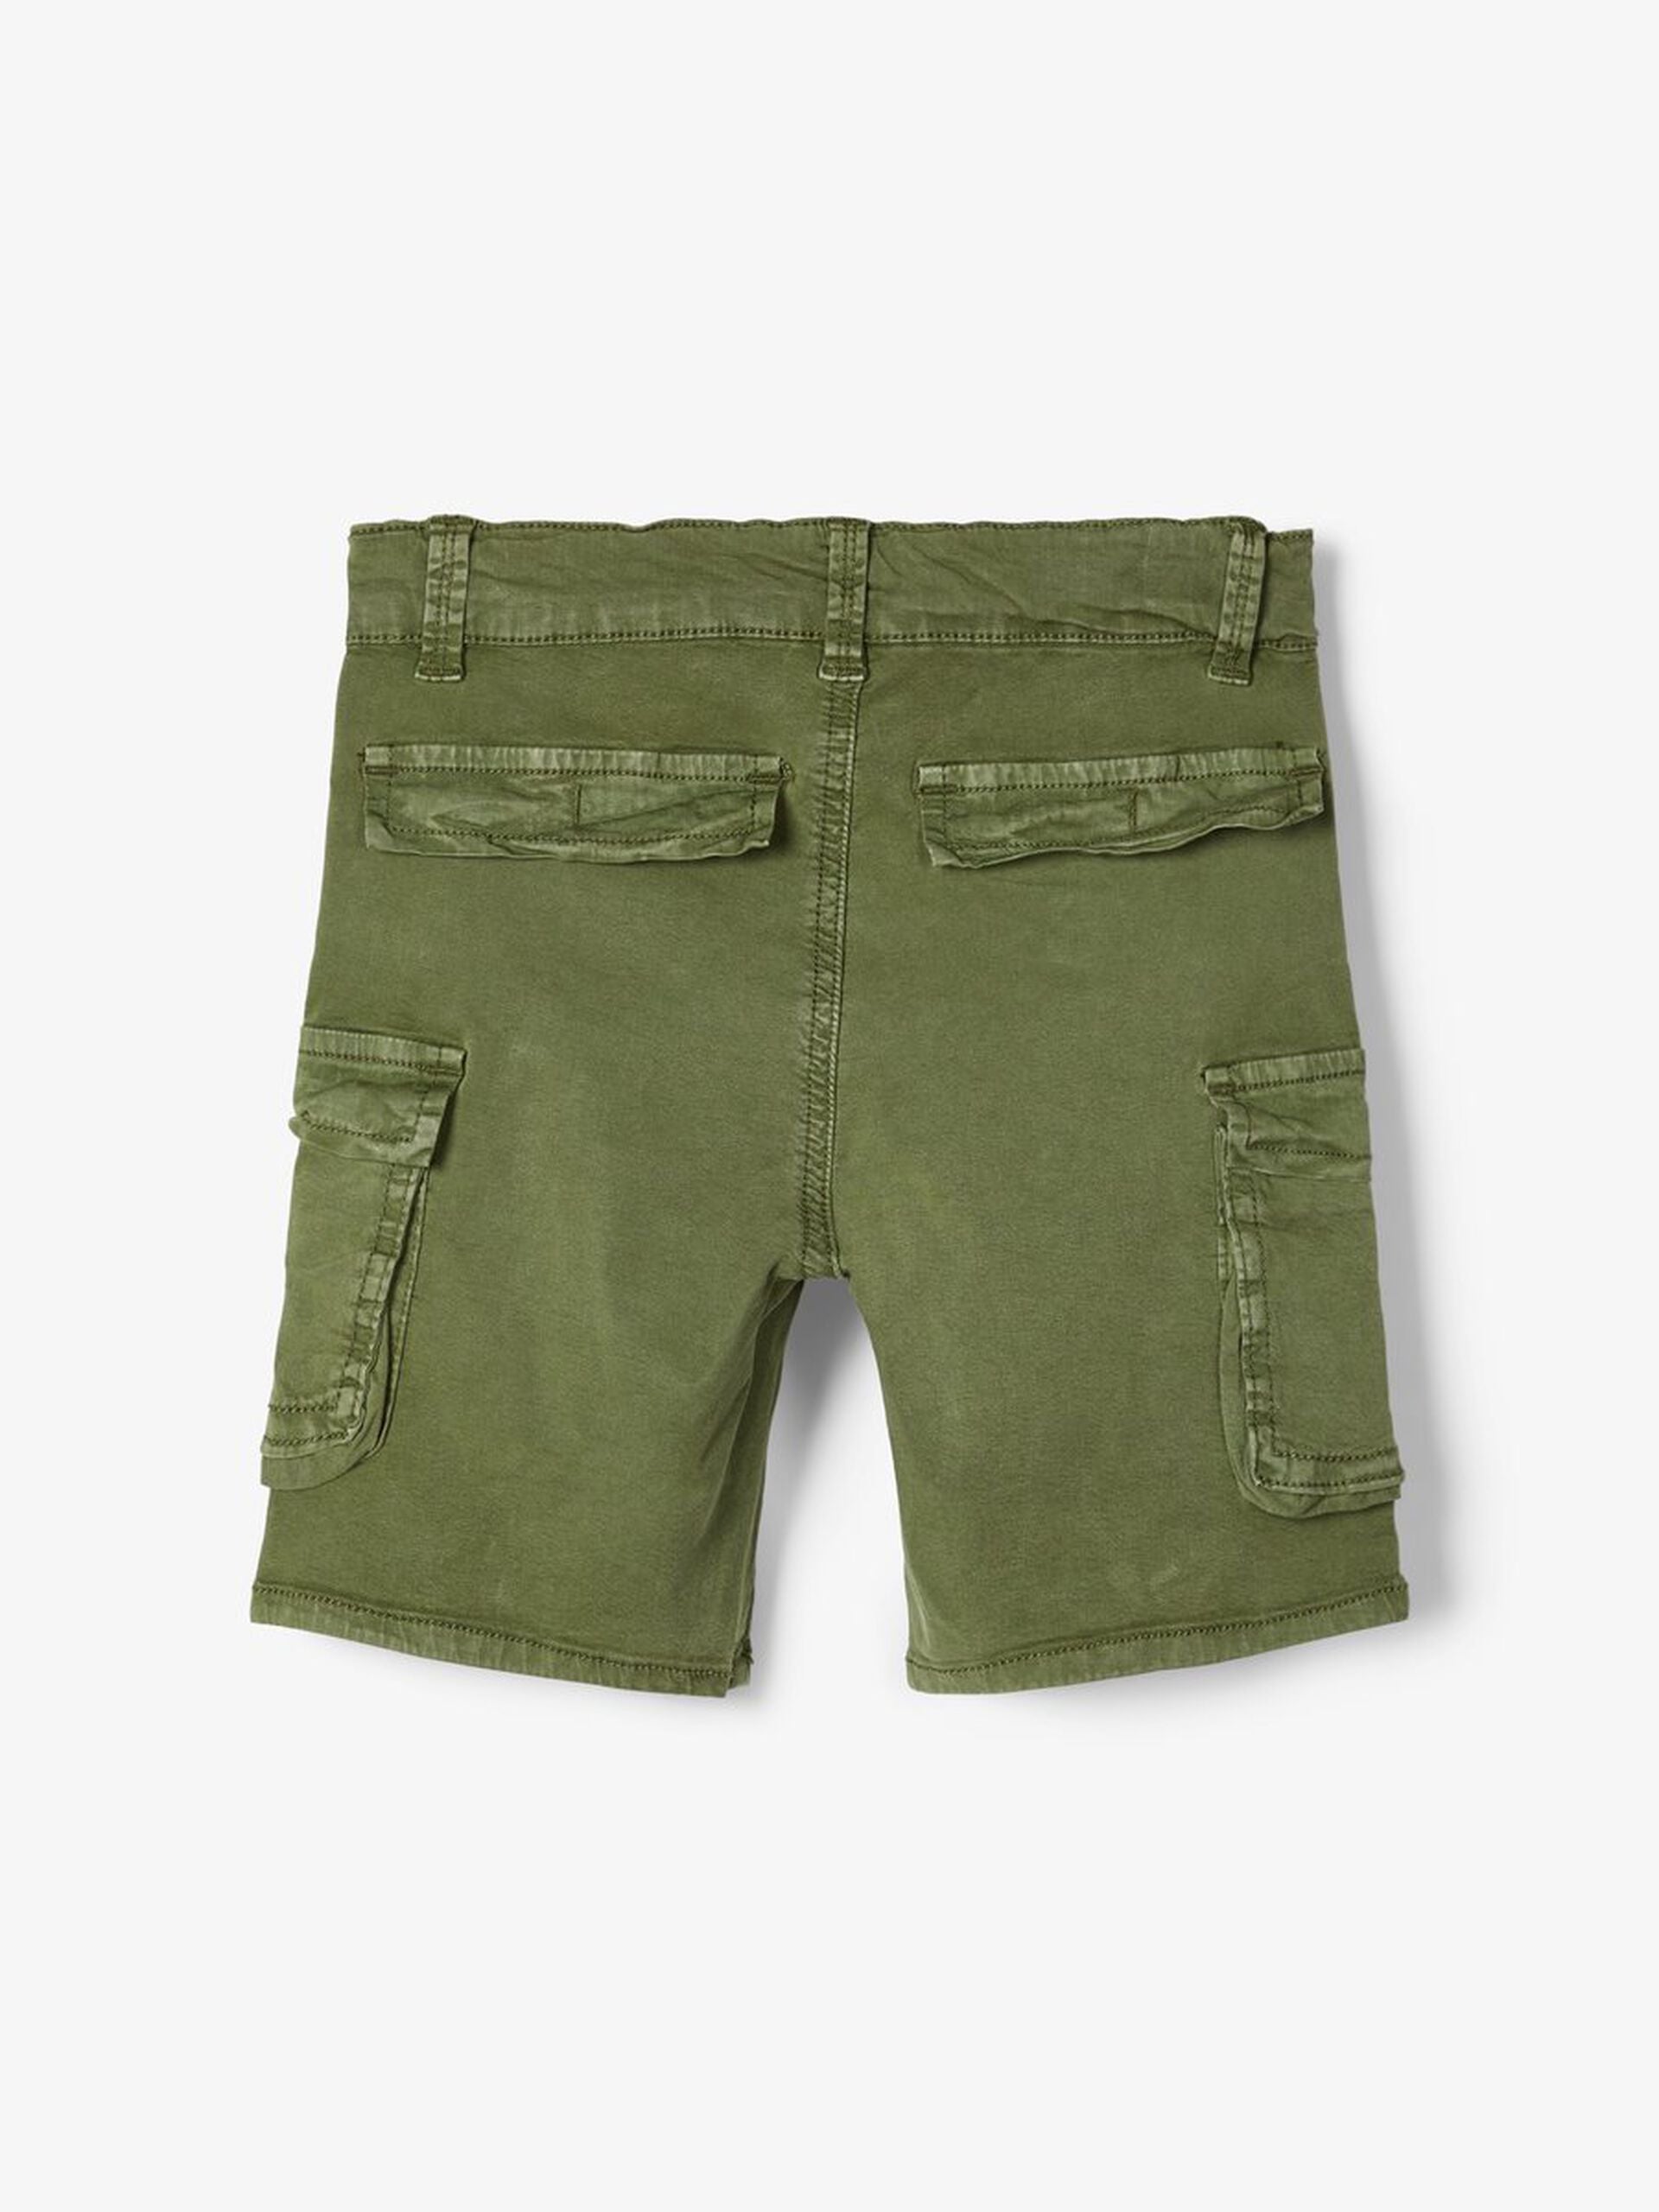 Barry Green Cargo Shorts - Spirit Clothing